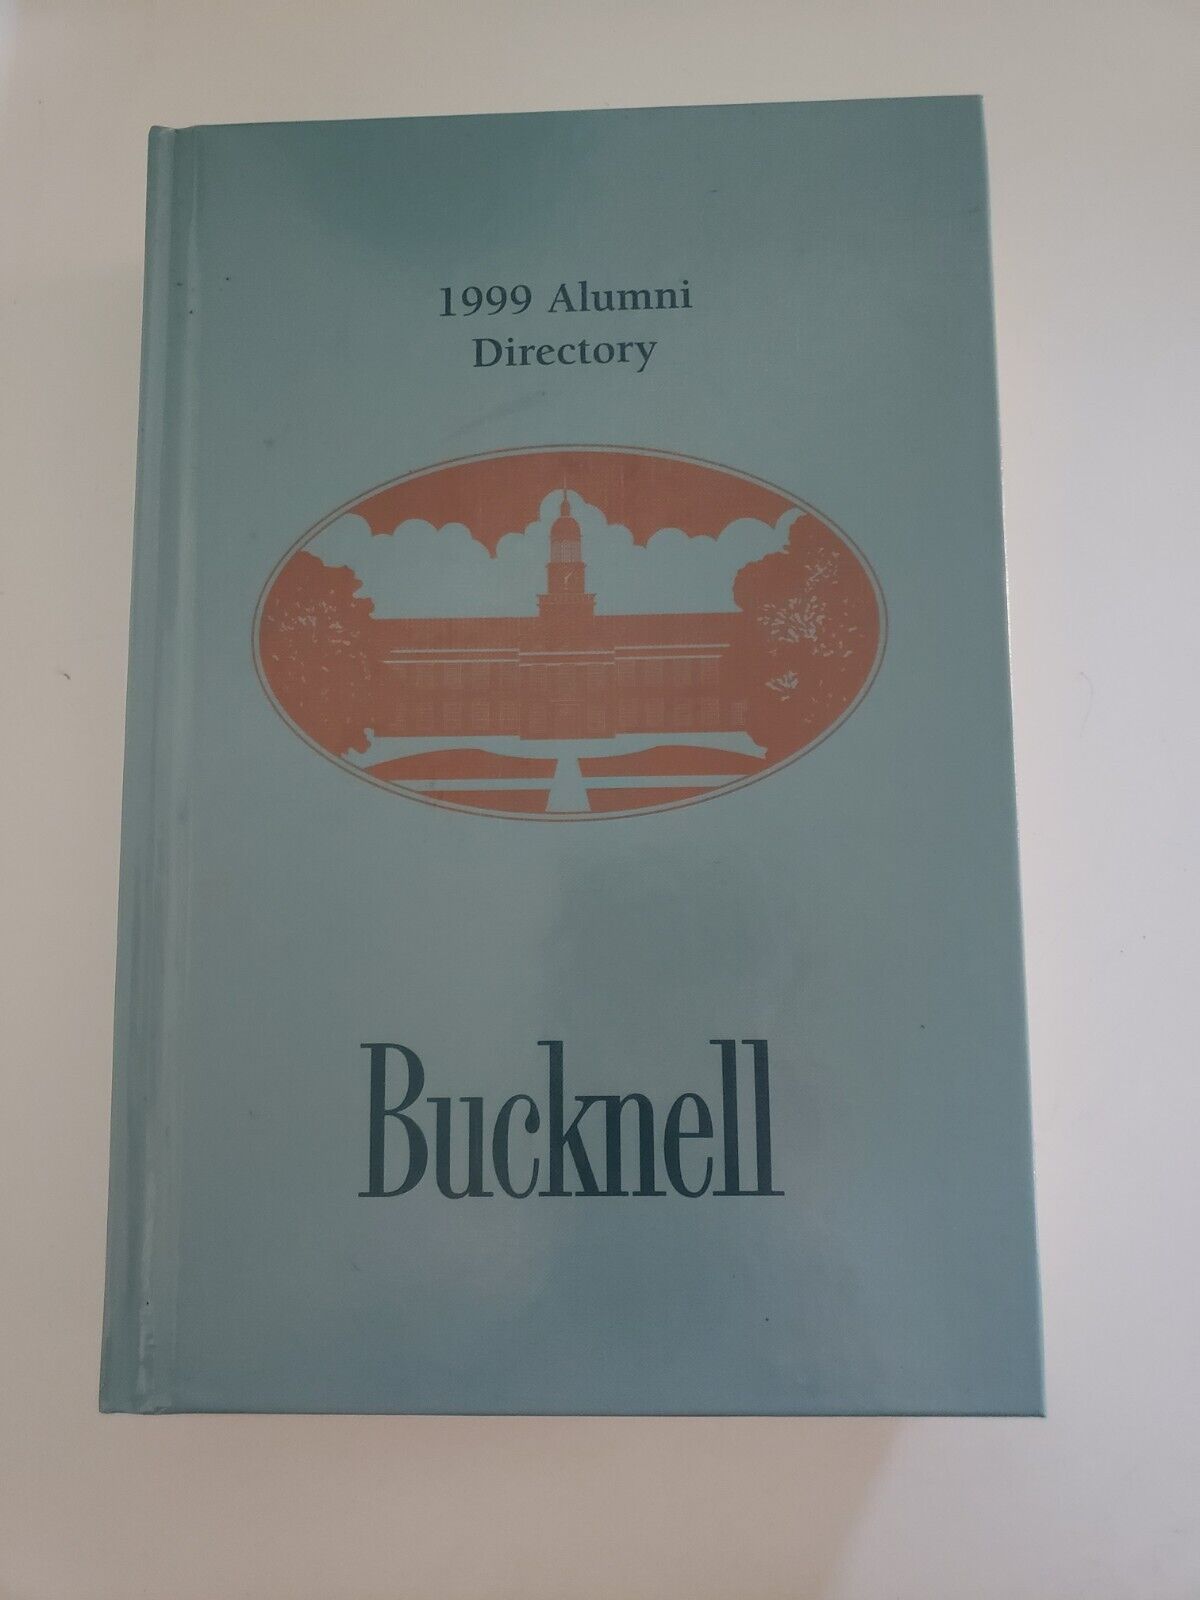 1999 Alumni Directory Bucknell University